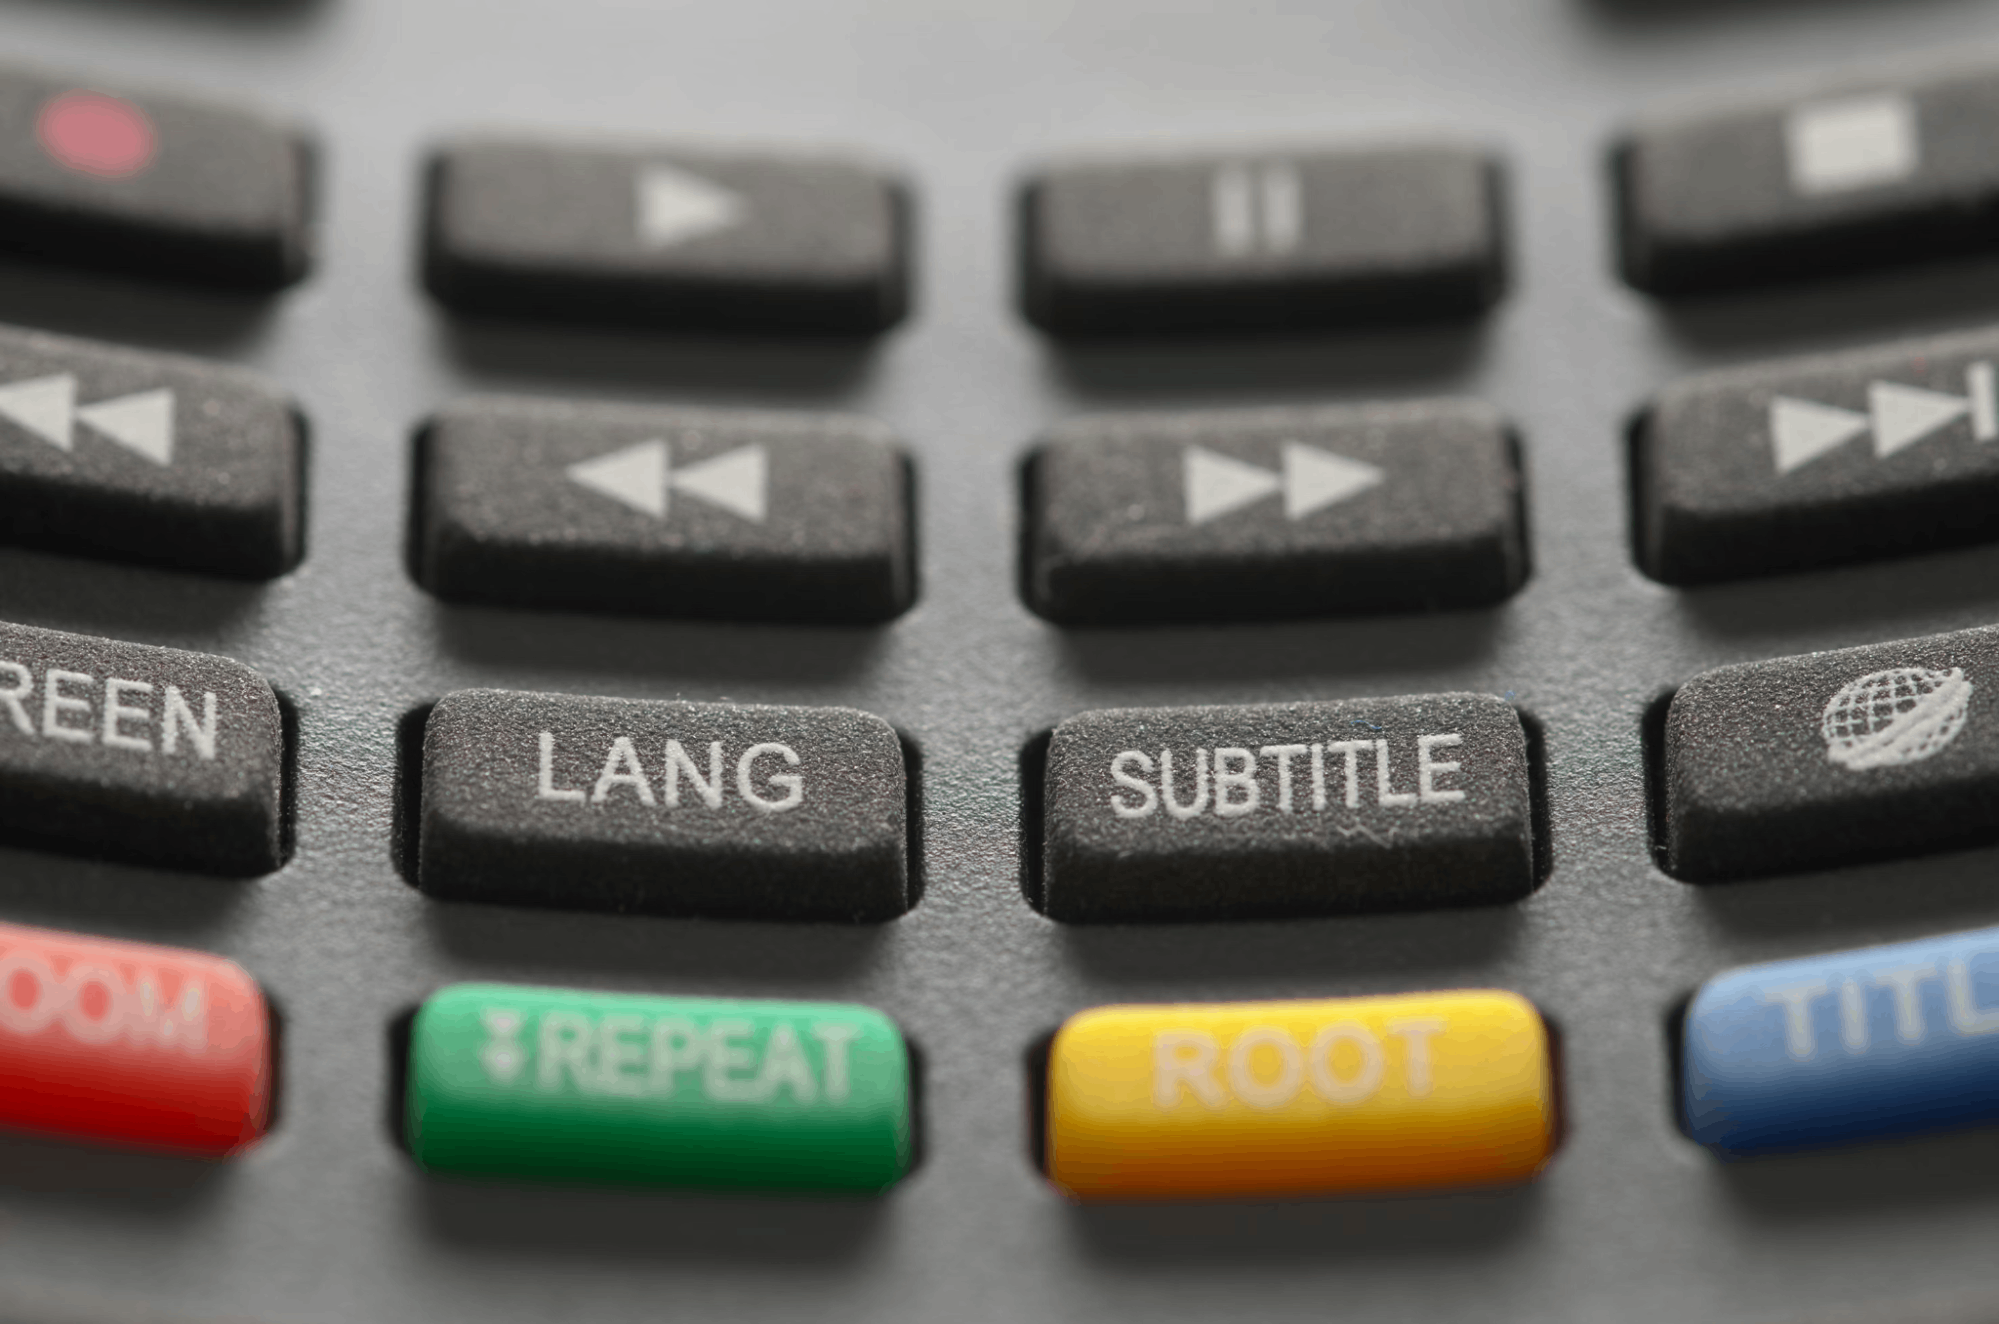 Subtitle button on a TV remote